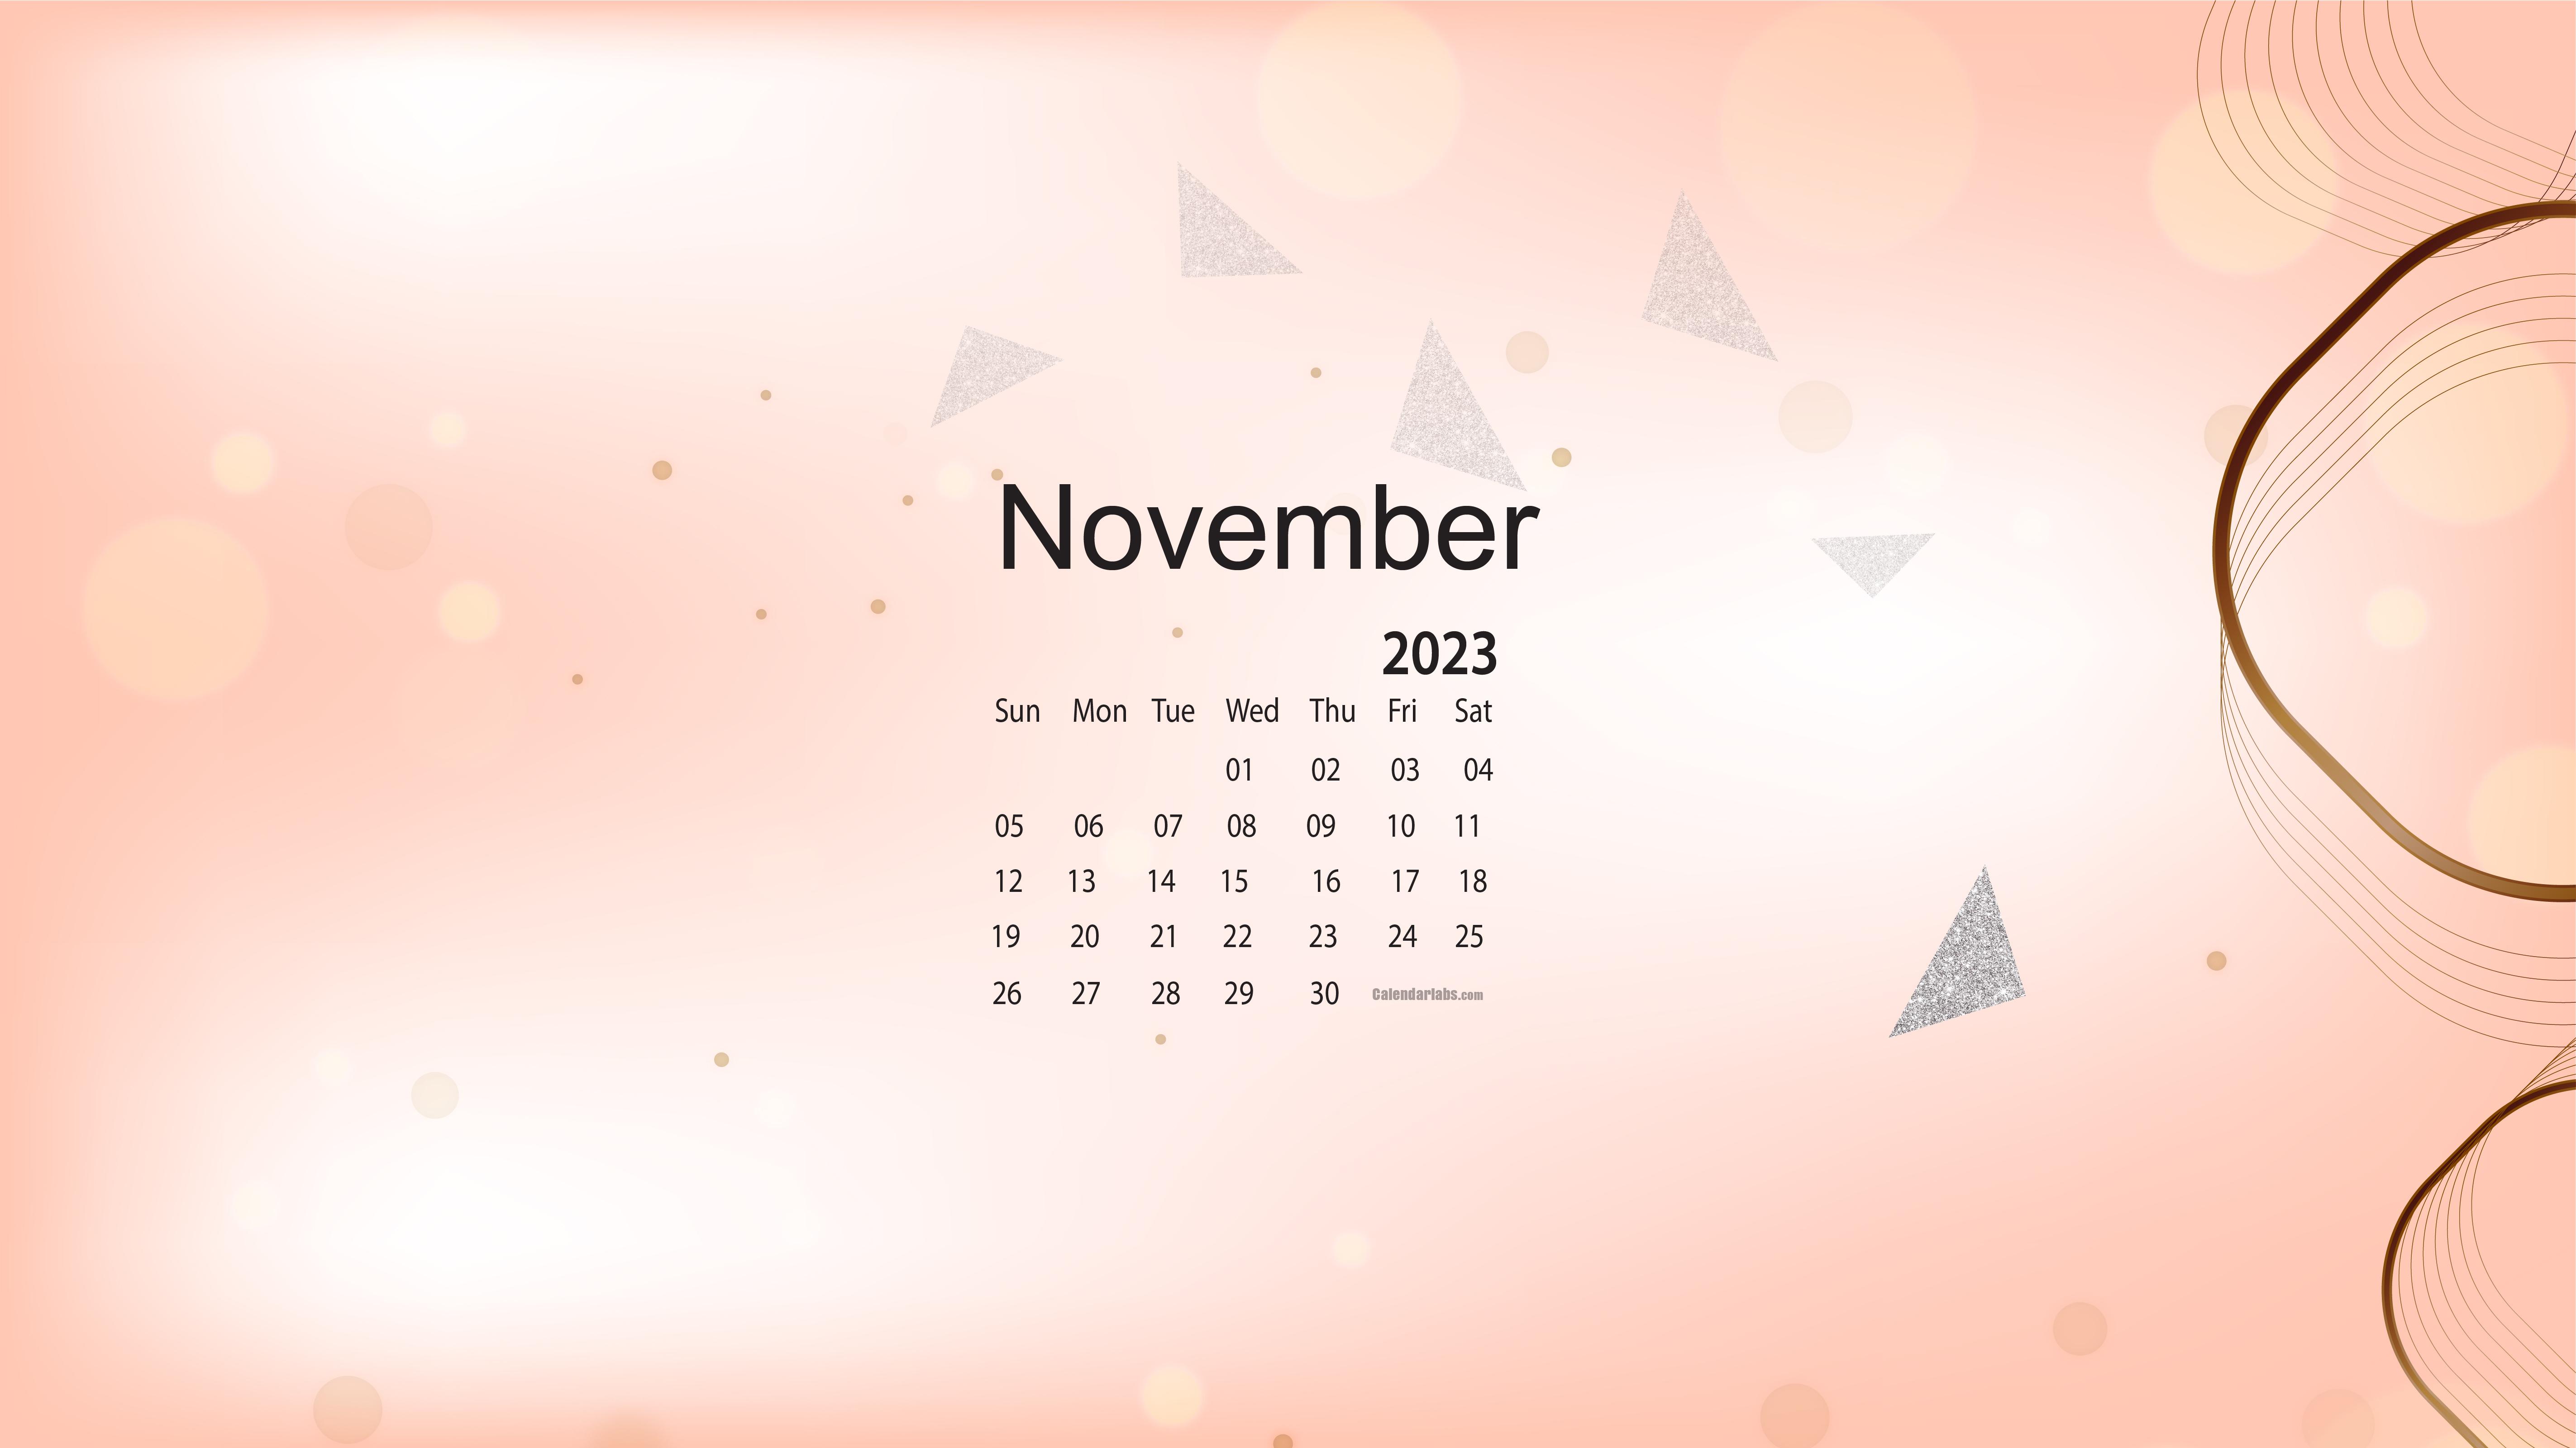 November Desktop Wallpaper Calendar Calendarlabs